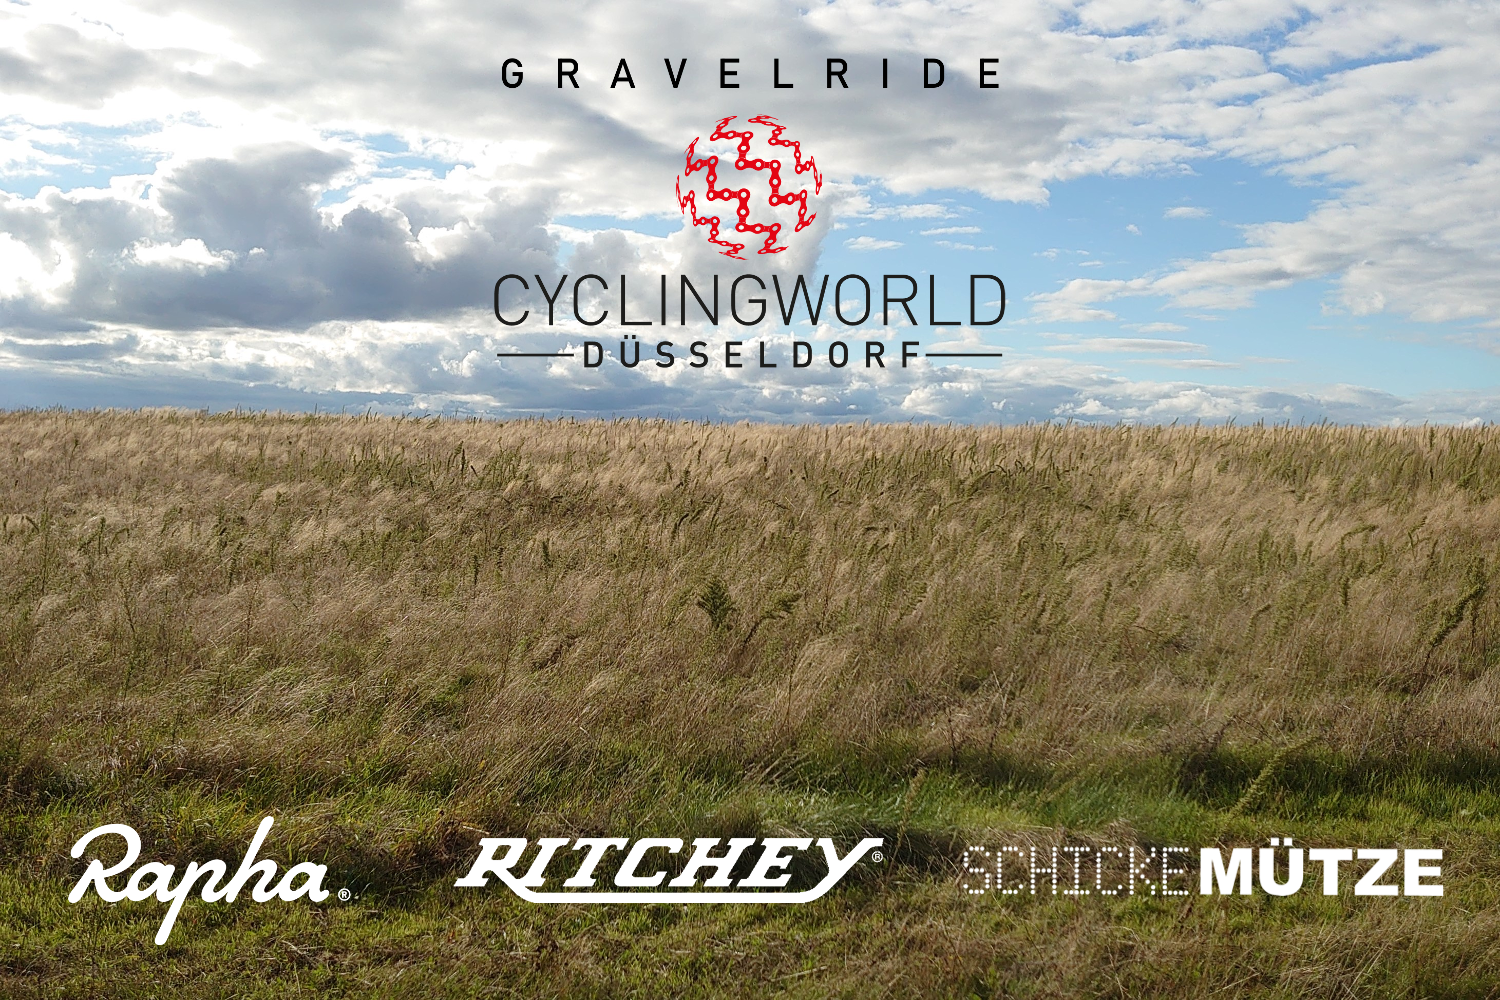 Alquila una bicicleta de carretera para Rapha X Ritchey X Schicke Mütze Gravel Ride
